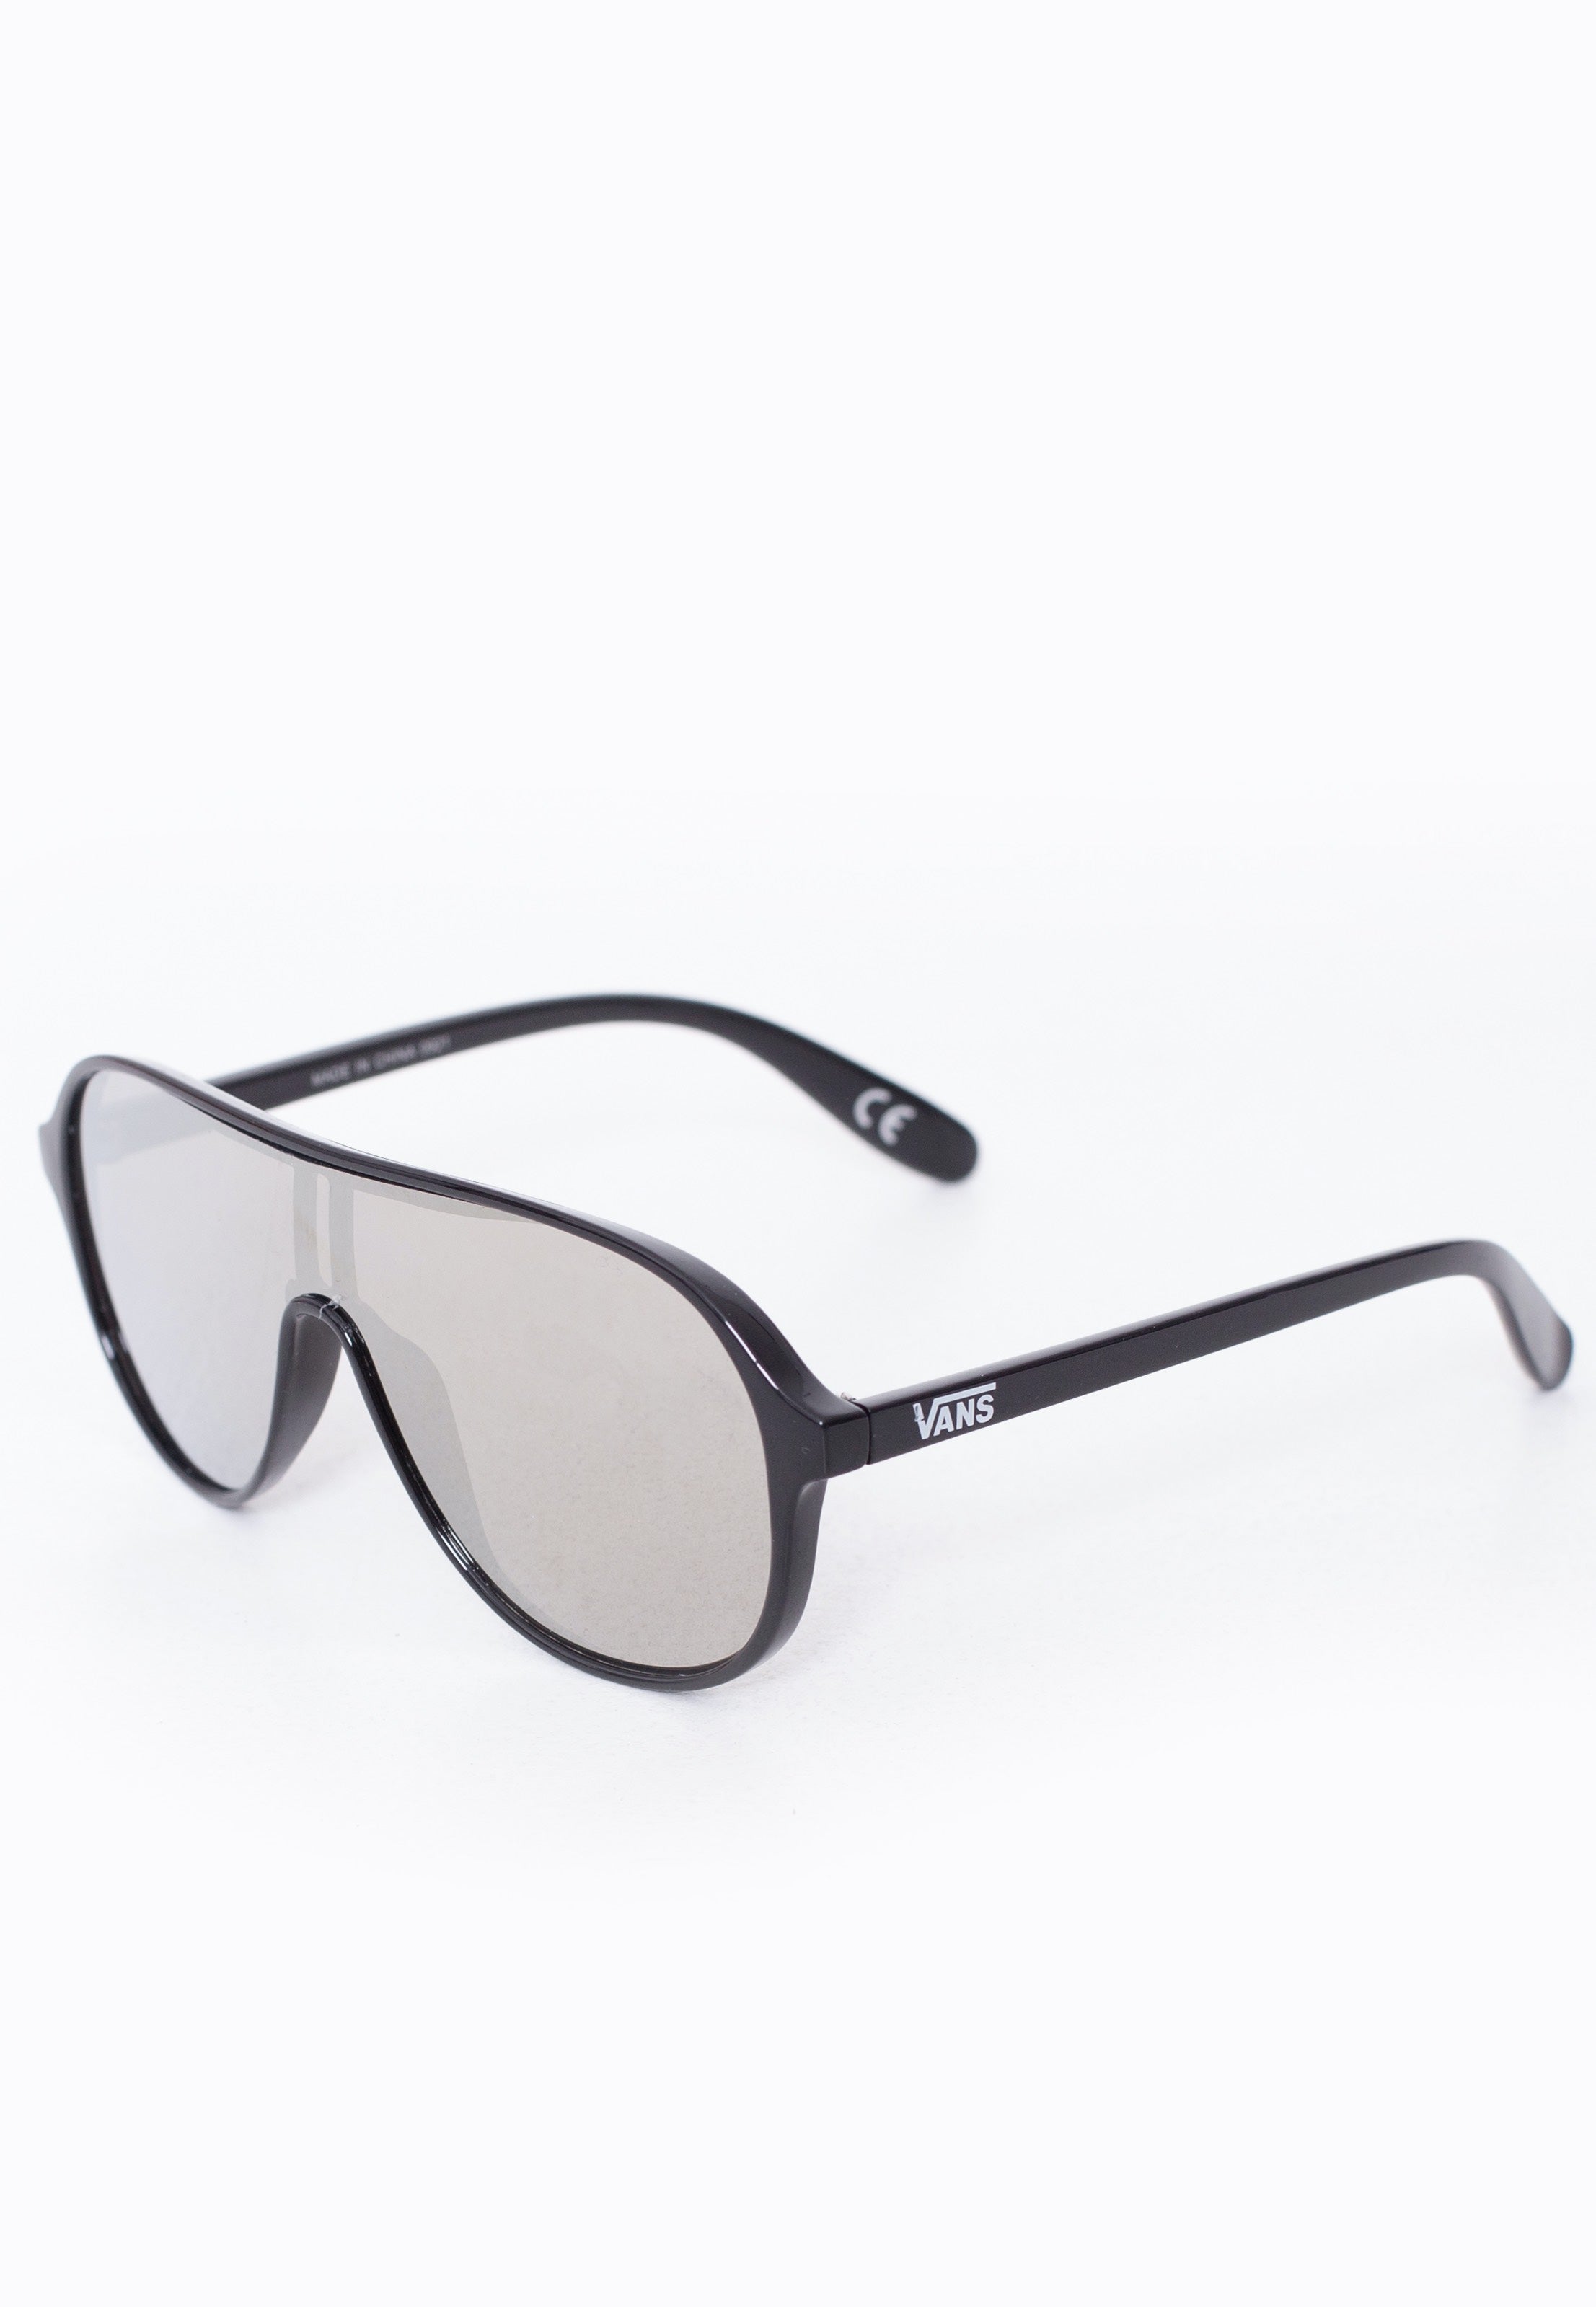 Vans - Bremerton Shades Black - Sunglasses